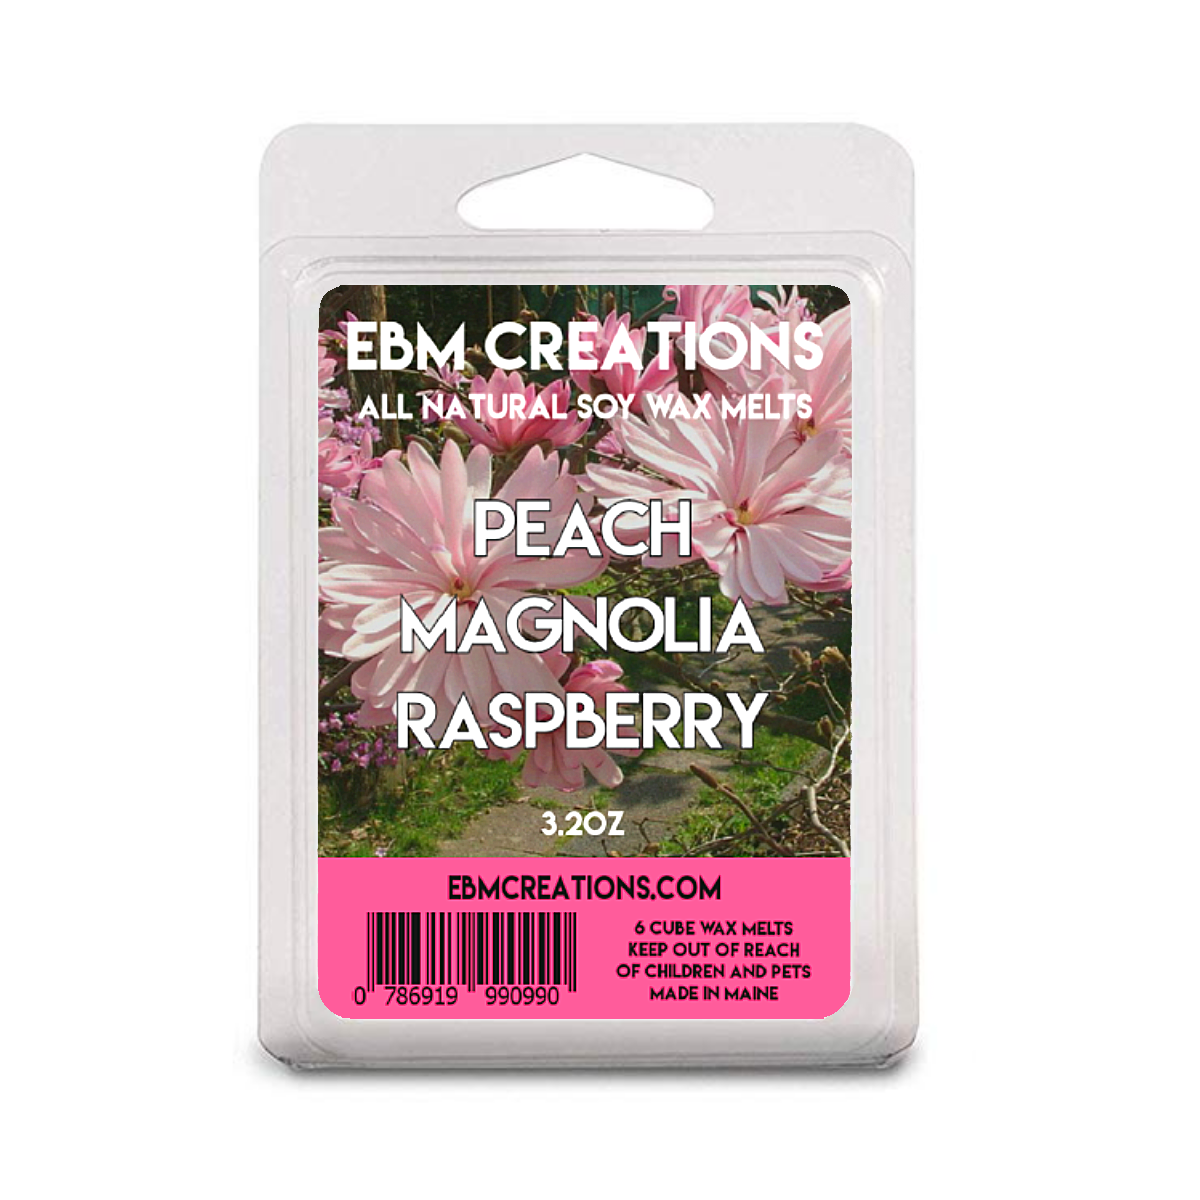 Peach Magnolia Raspberry - 3.2 oz Clamshell